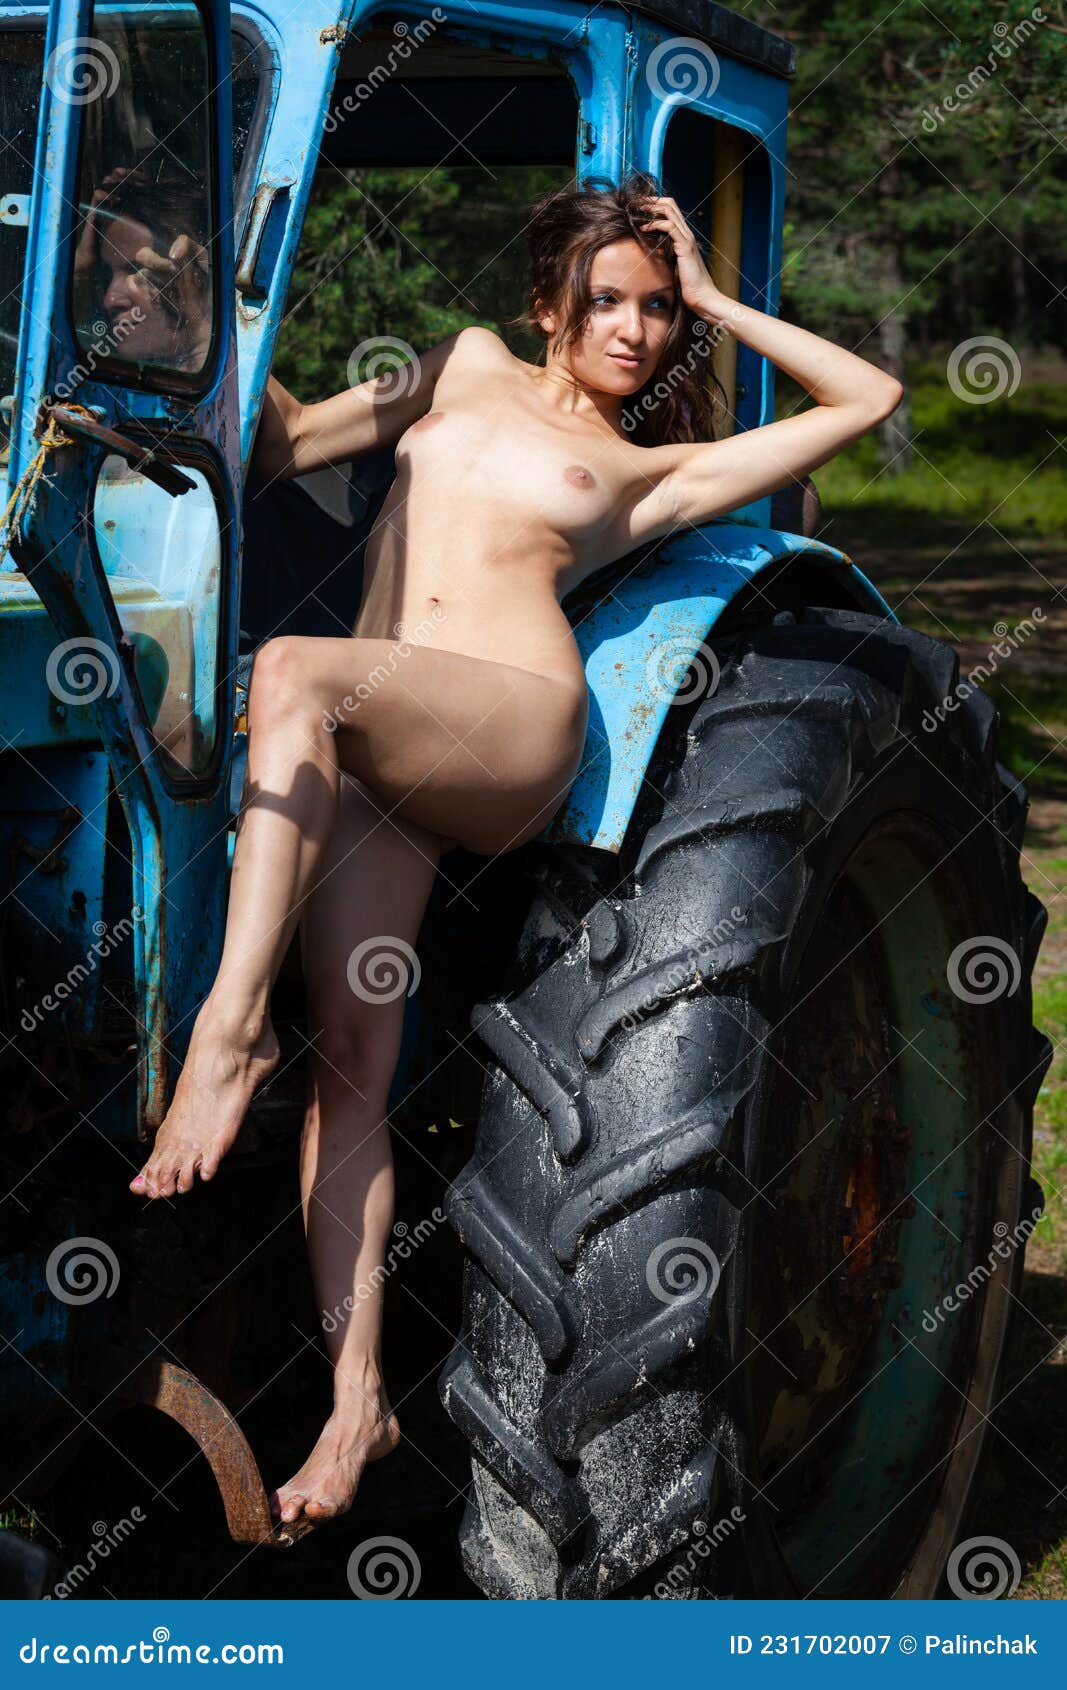 Nude Women On Tractors face meme